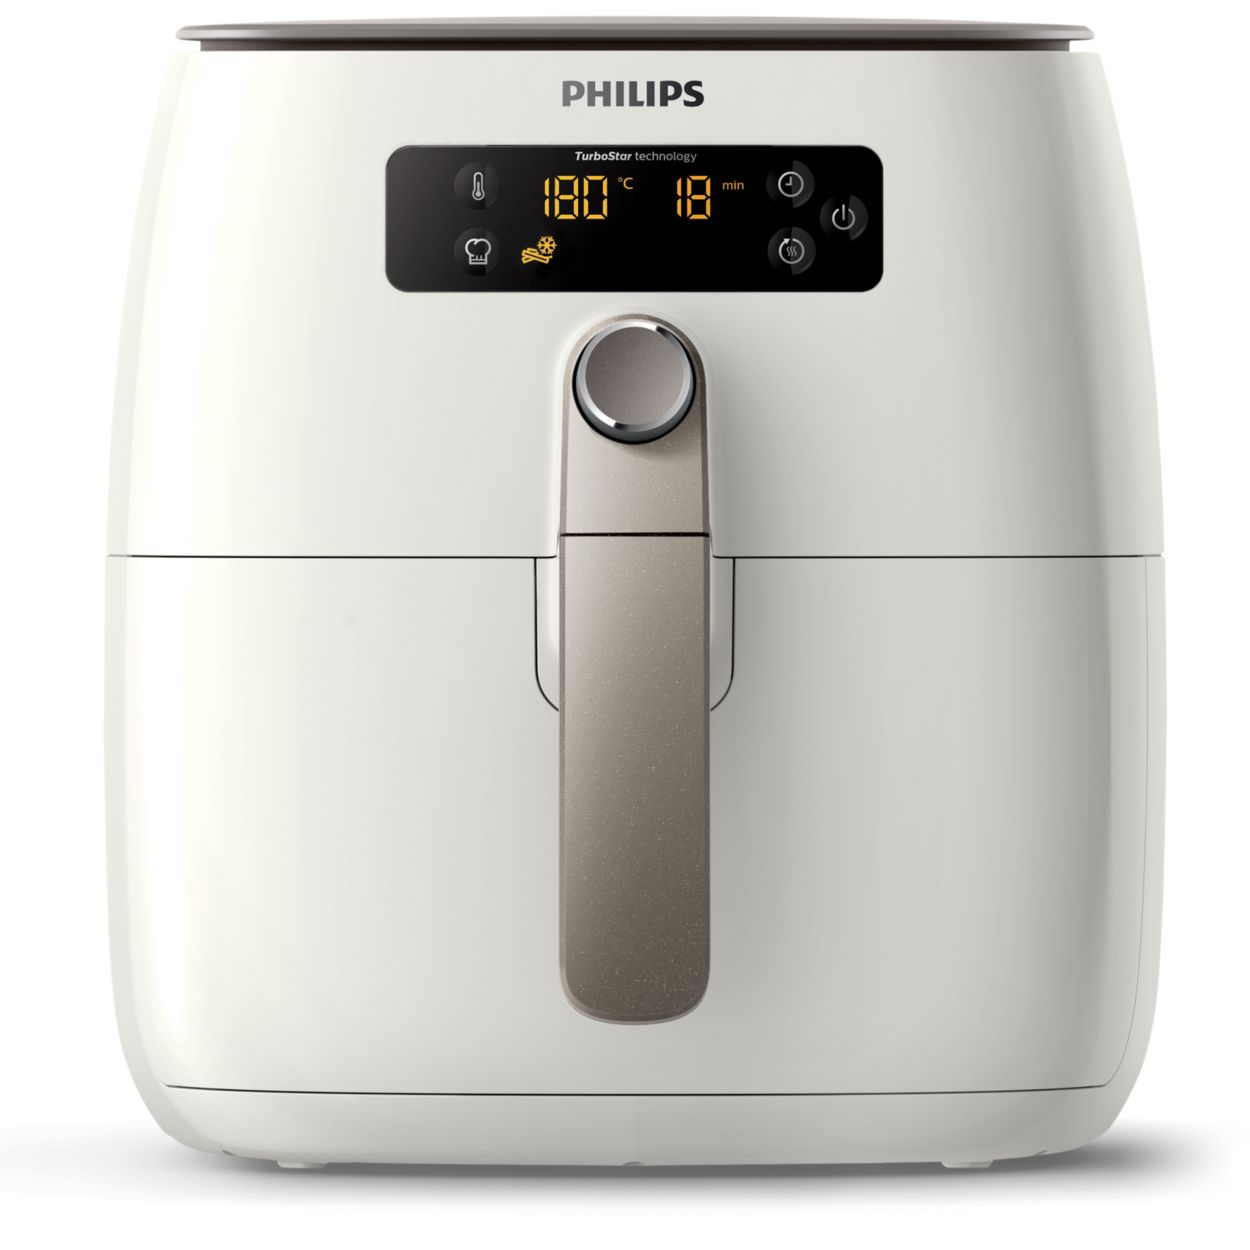 Philips Airfryer Avance Digital TurboStar Fry Healthy w/ 75% Less